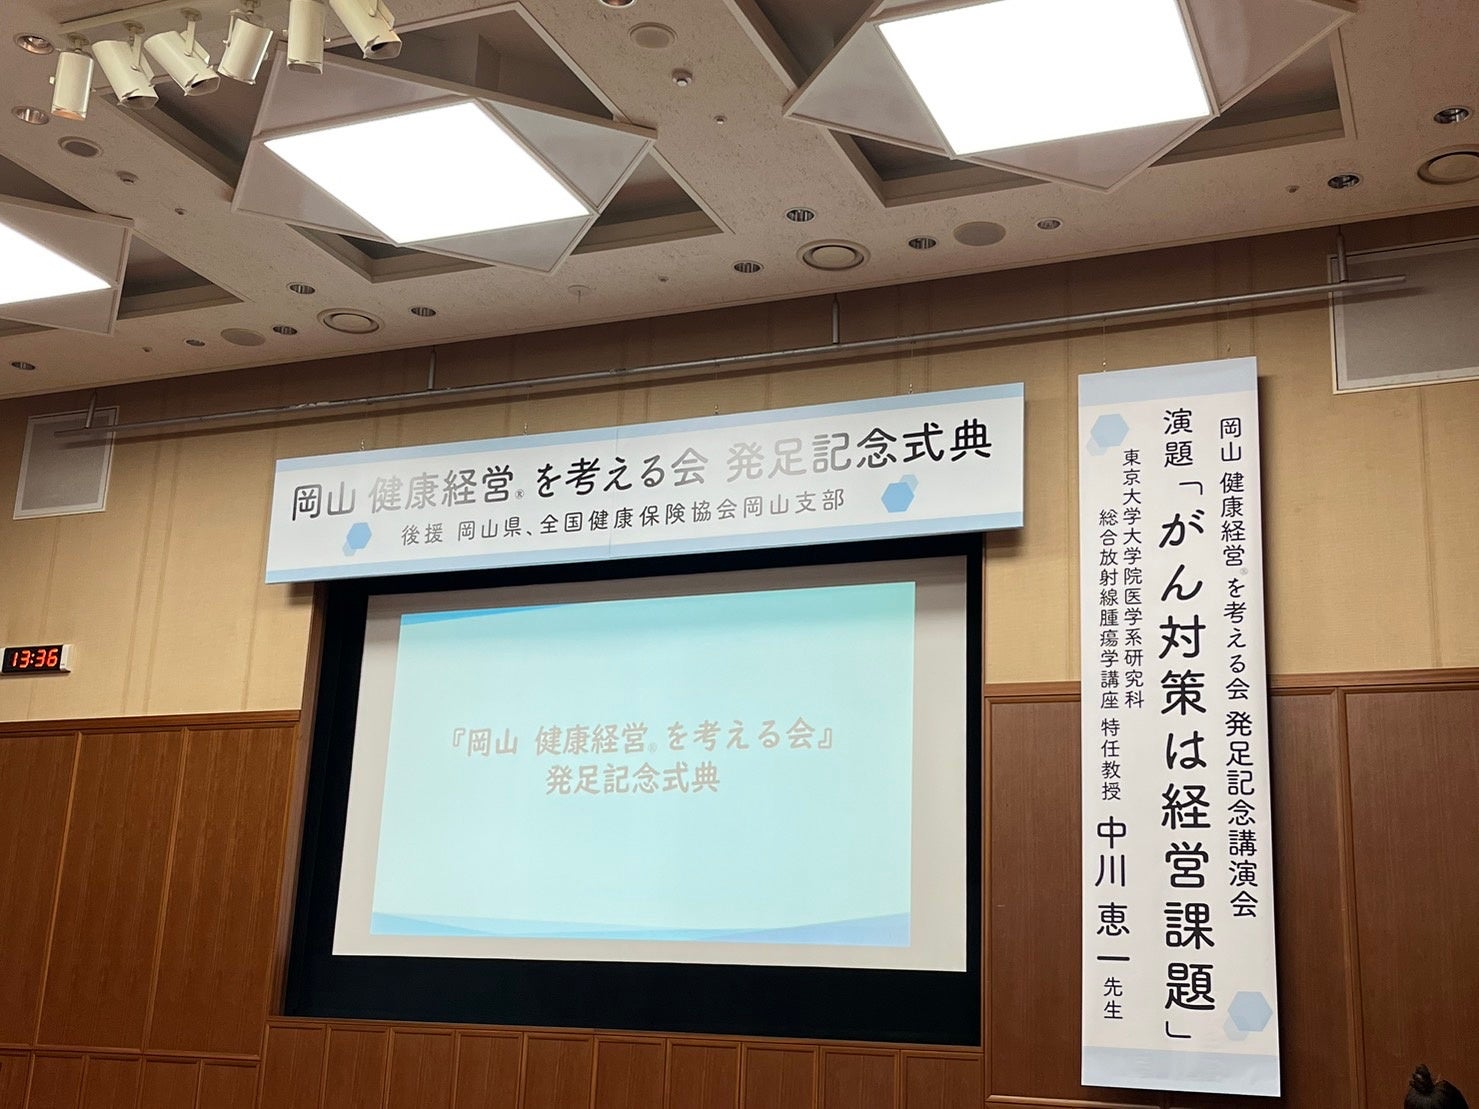 HIRAC FUND、オンライン医薬品ECプラットフォーム『東京美肌堂』を運営するLATRICOに追加出資